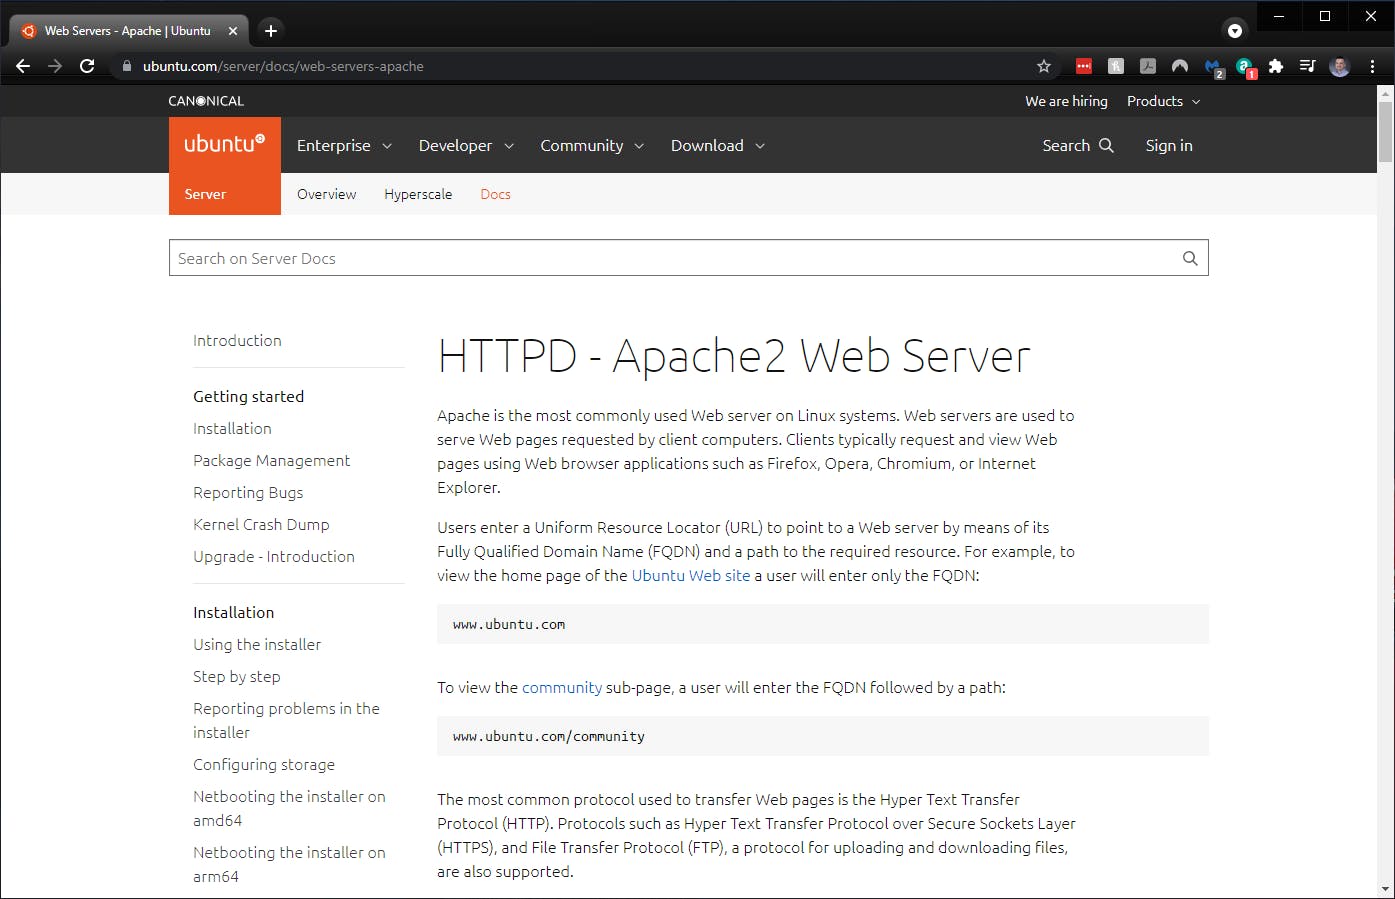 Web Servers - Apache | Ubuntu Documentation